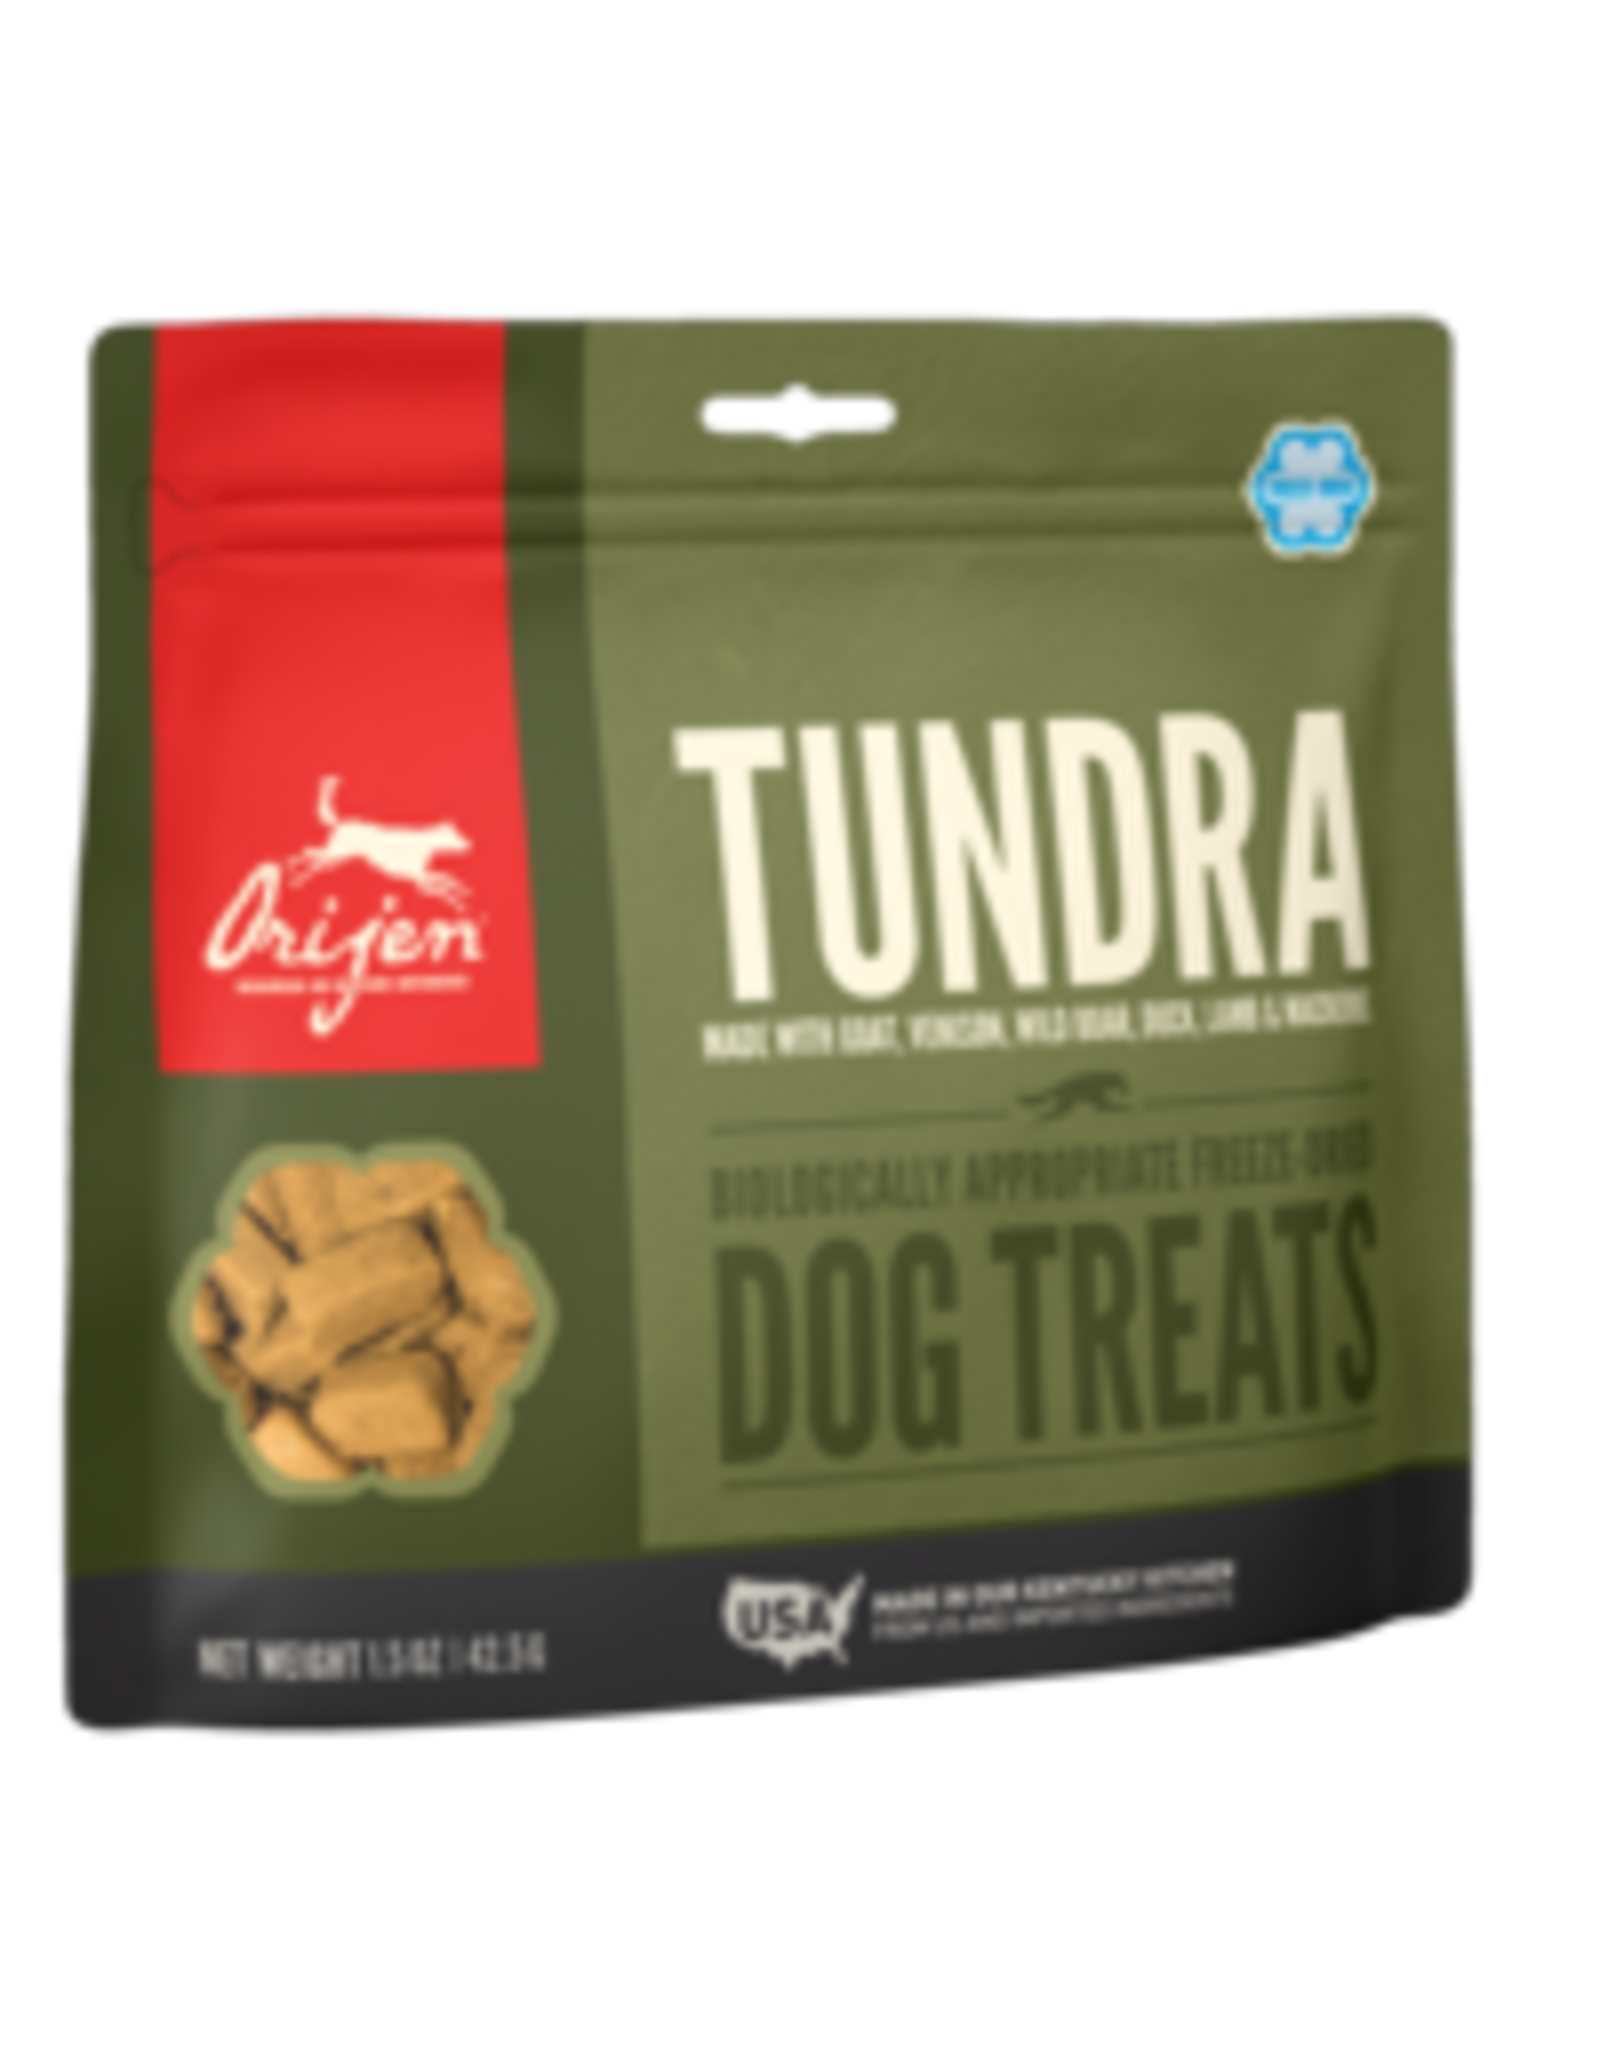 CHAMPION PET FOOD ORIJEN DOG TUNDRA FREEZE DRIED TREAT 3.25OZ